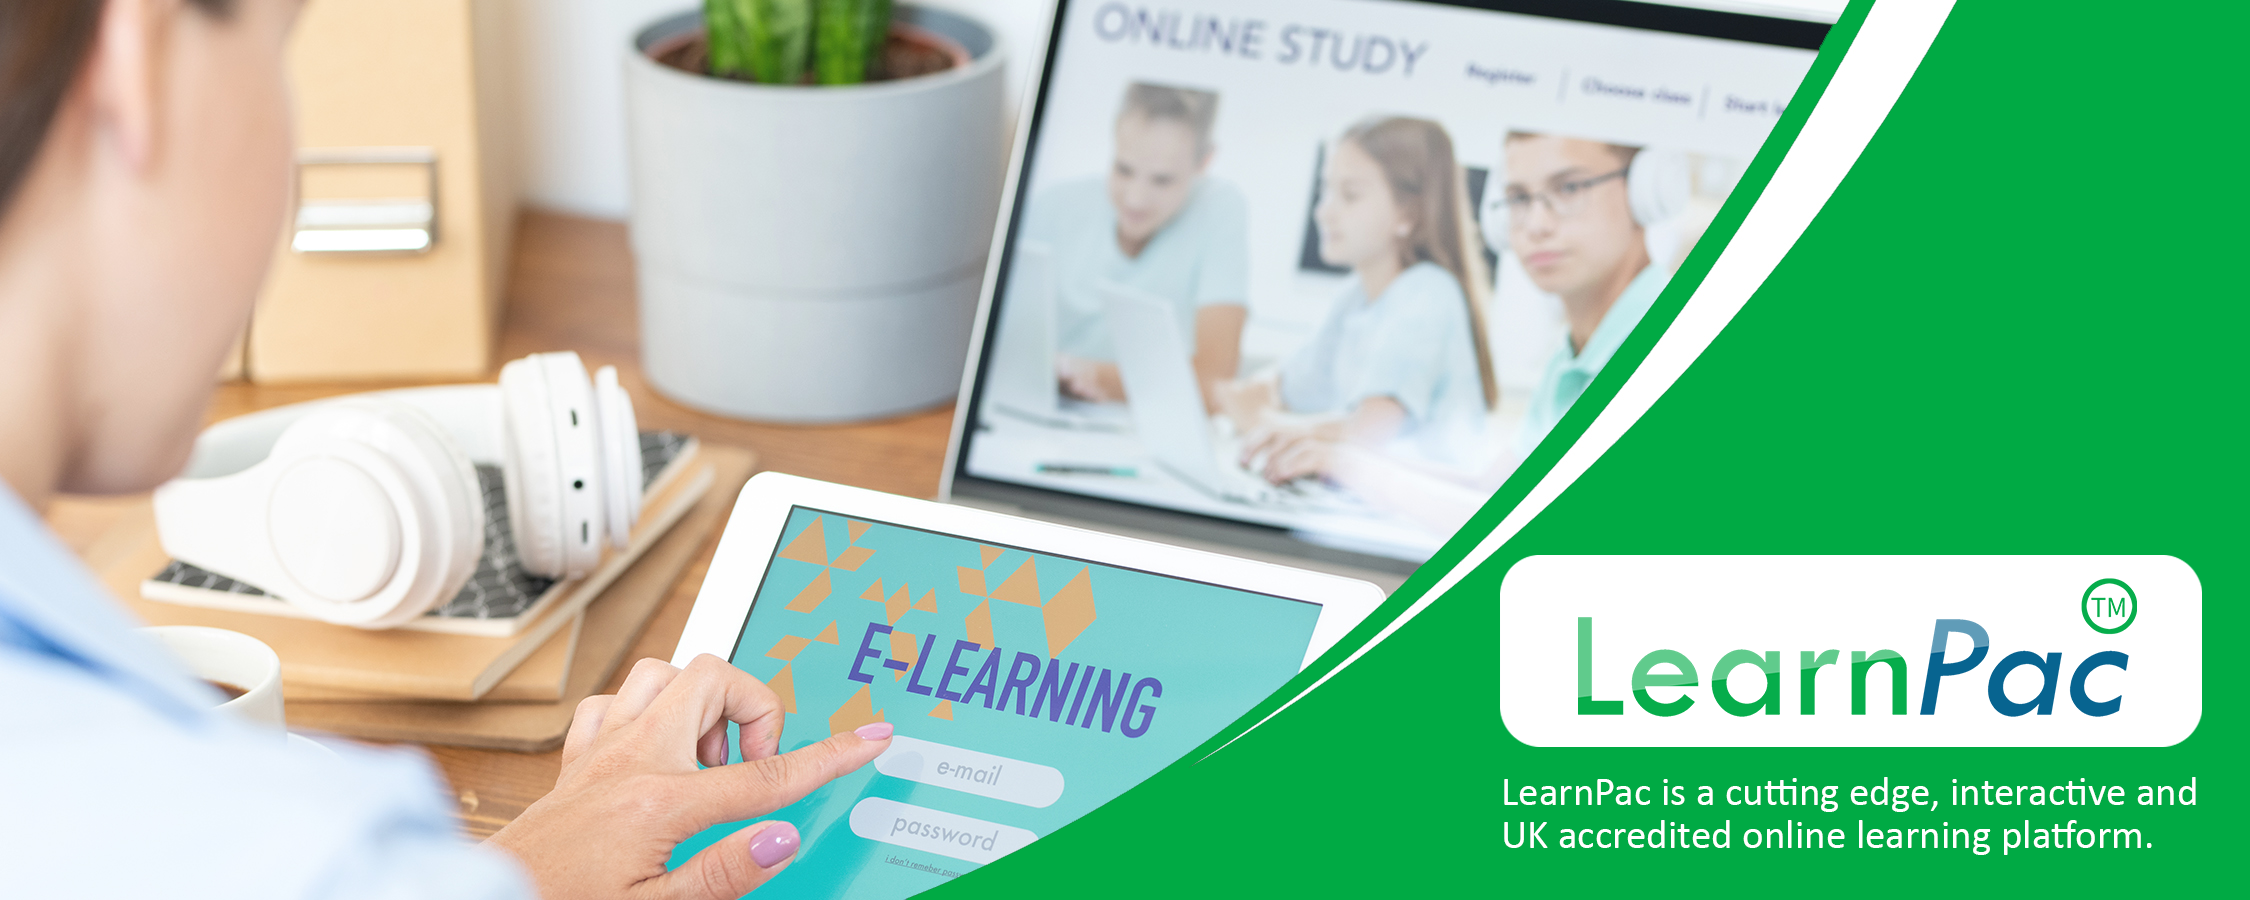 Creative Problem-Solving Training - Online Learning Courses - E-Learning Courses - LearnPac Systems UK -